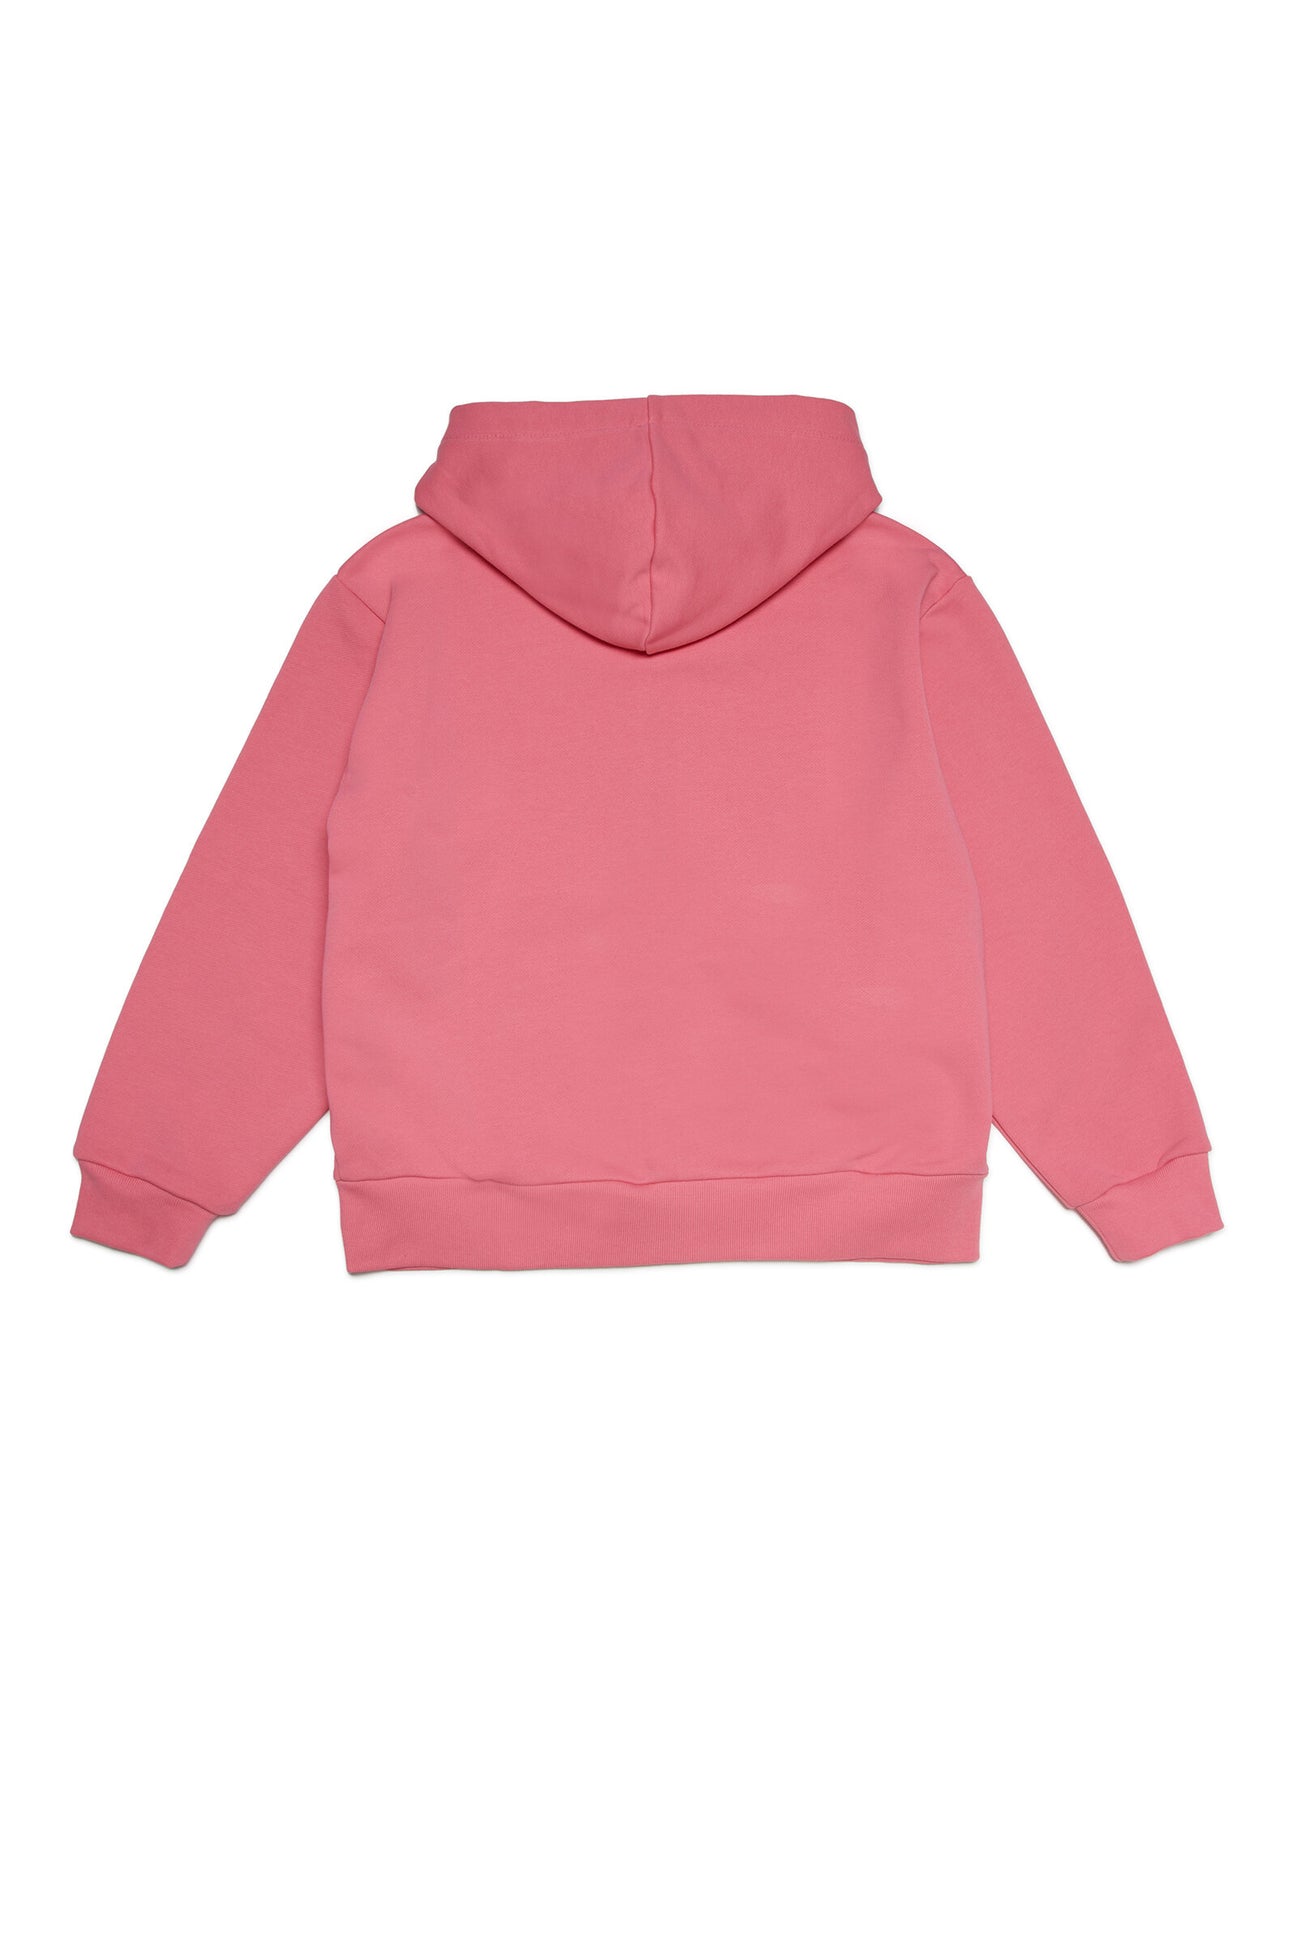 Cotton hooded sweatshirt with zip and logo Cotton hooded sweatshirt with zip and logo